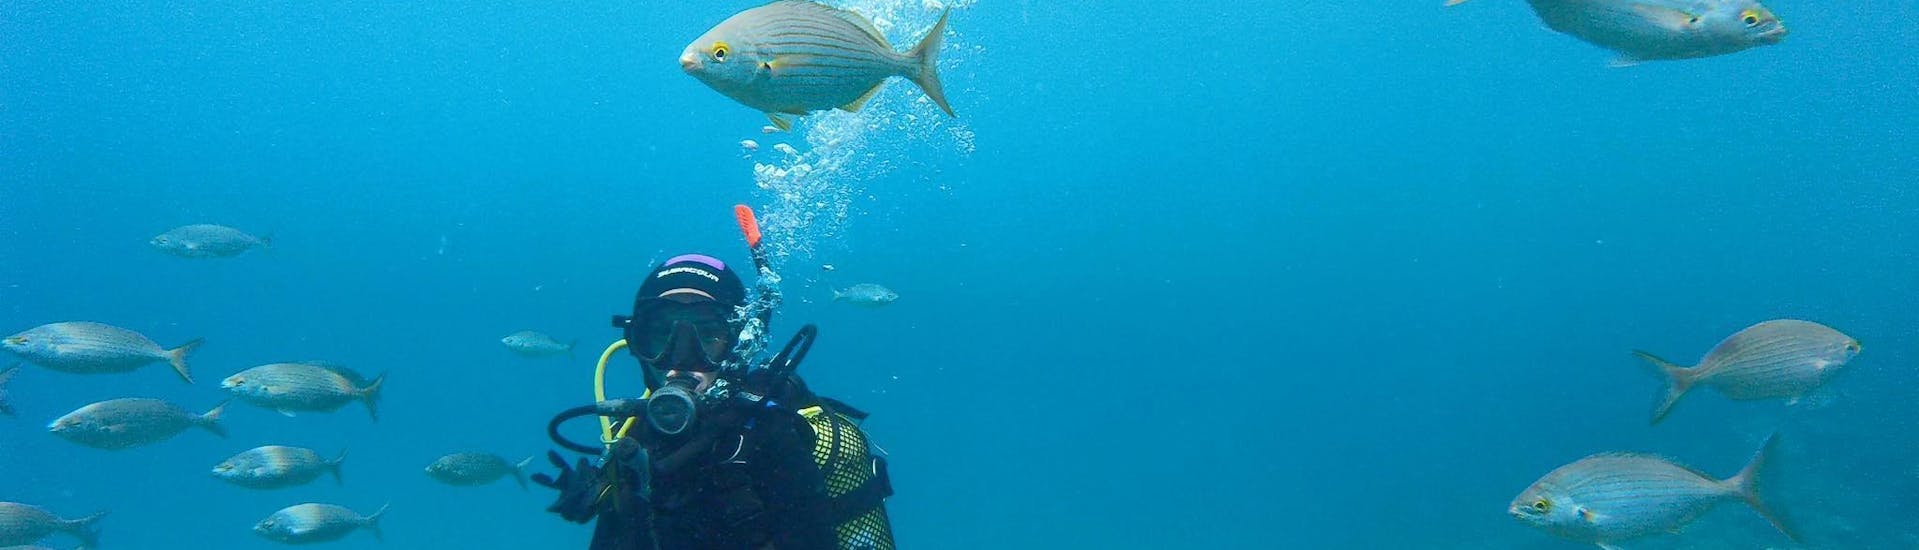 trial-scuba-diving-course-for-beginners-discover-scuba-big-fish-tenerife-hero